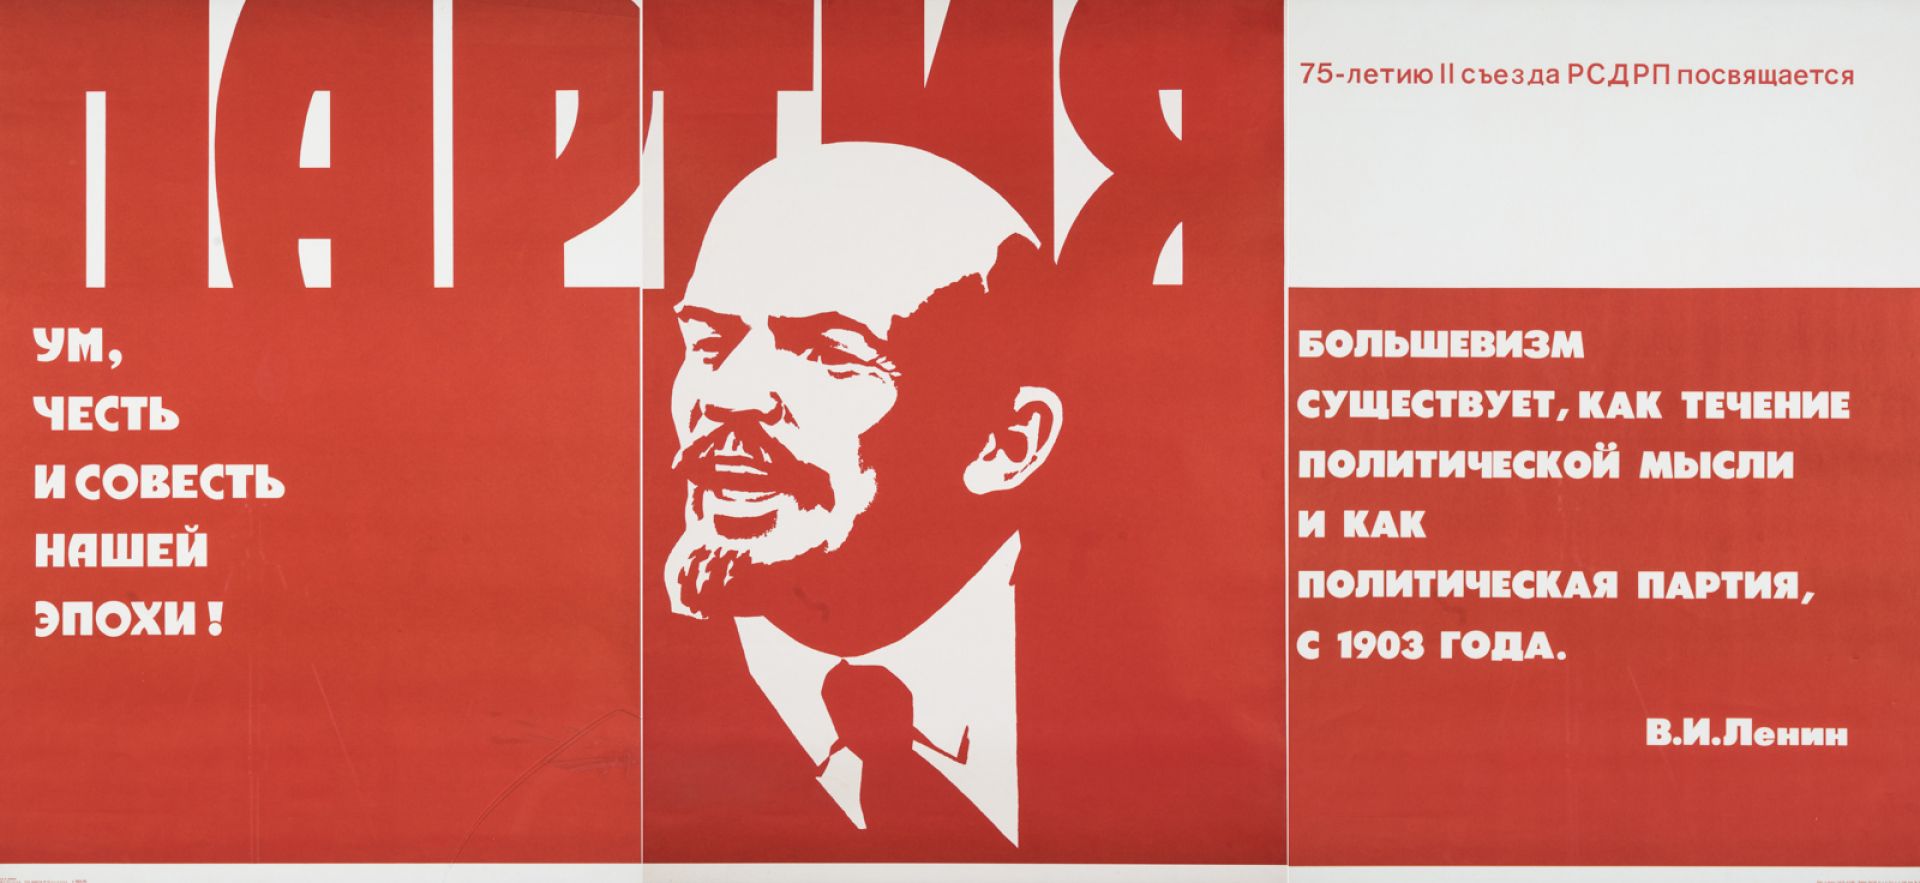 Null BABIN (20)

1978年的三联画 党，布尔什维克主义作为一种政治理想和政党存在于1903年。"我们这个时代的智慧、荣誉和良知" 列宁

每幅&hellip;